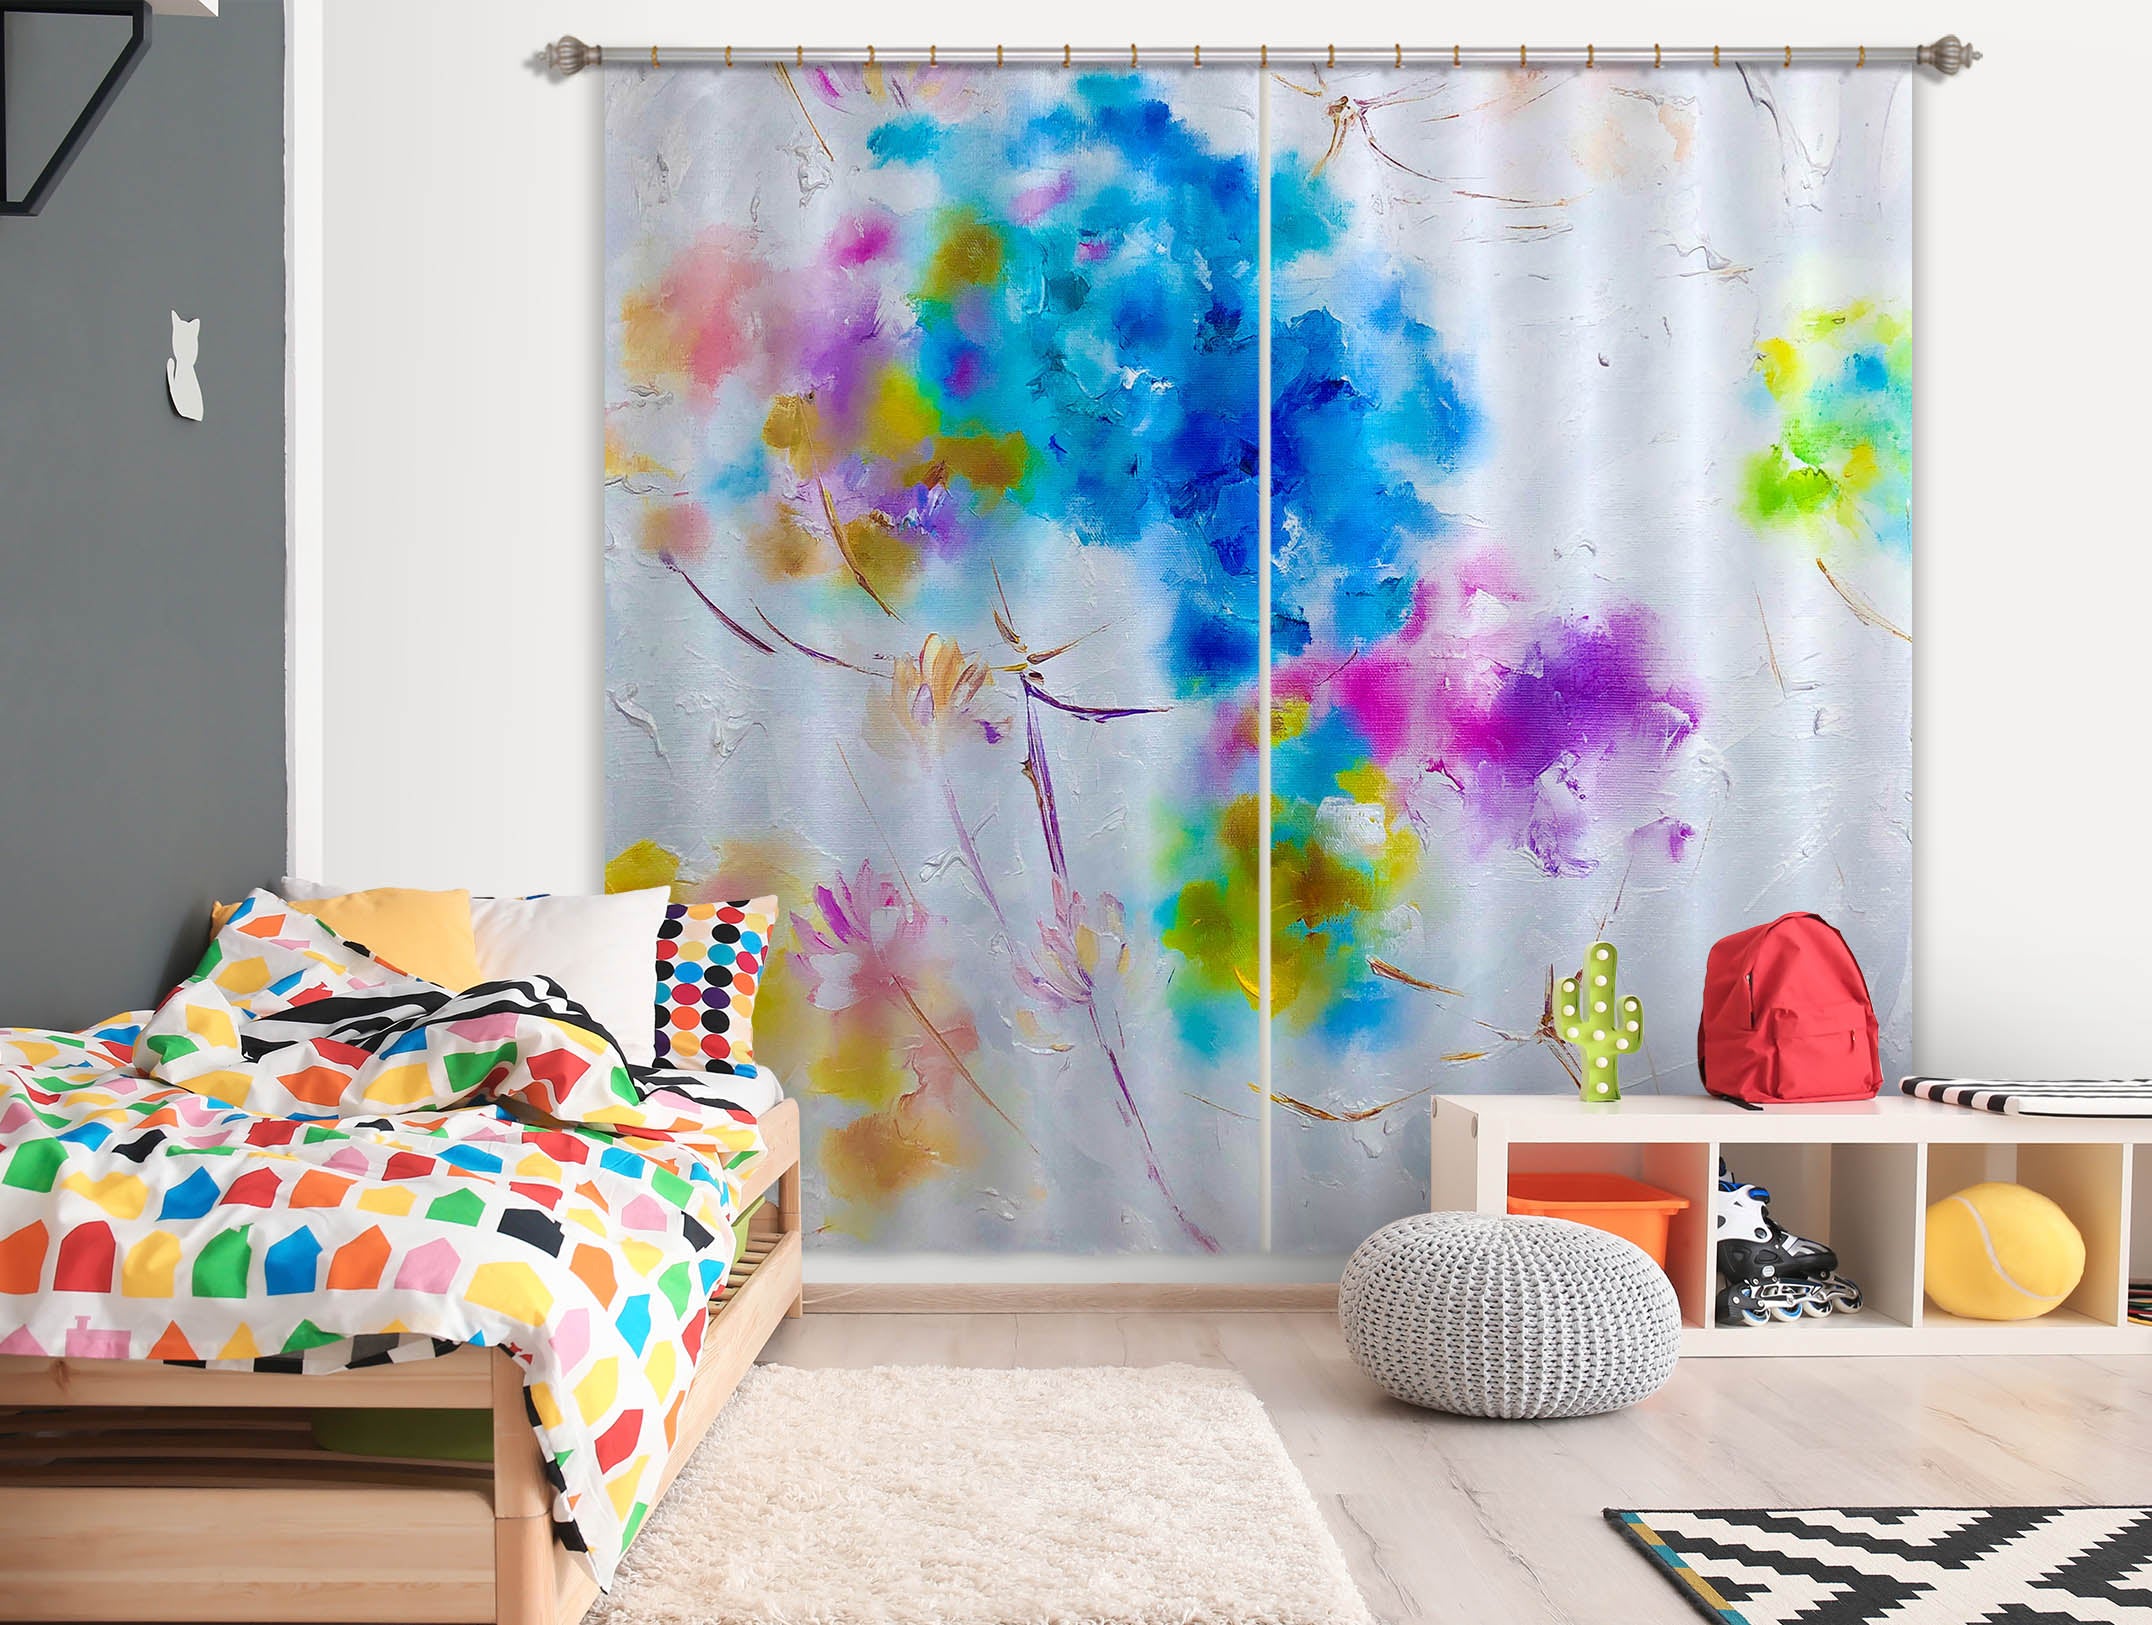 3D Watercolor Flowers 2400 Skromova Marina Curtain Curtains Drapes